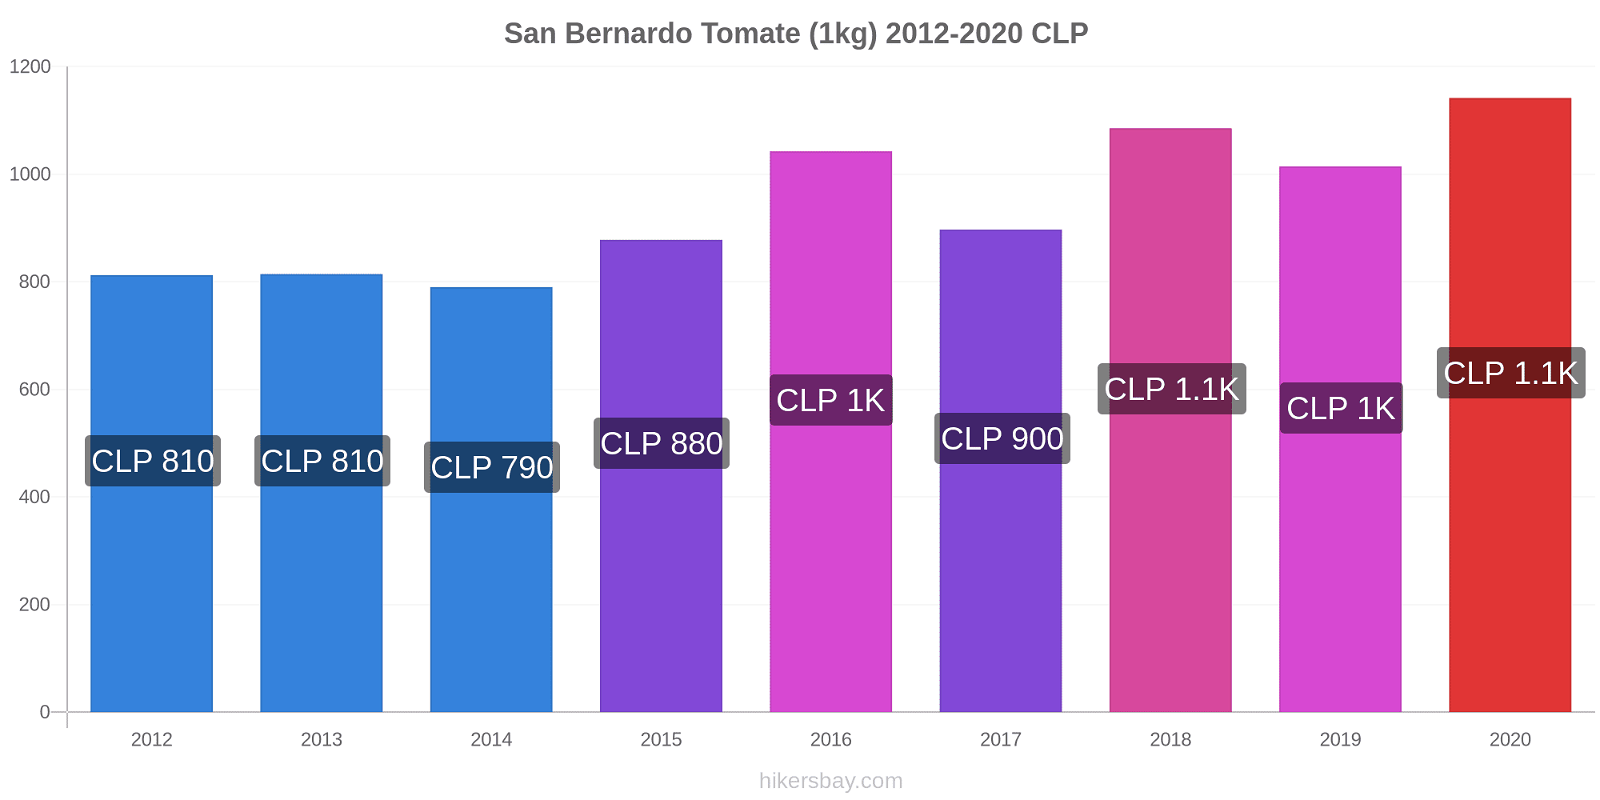 San Bernardo changements de prix Tomate (1kg) hikersbay.com